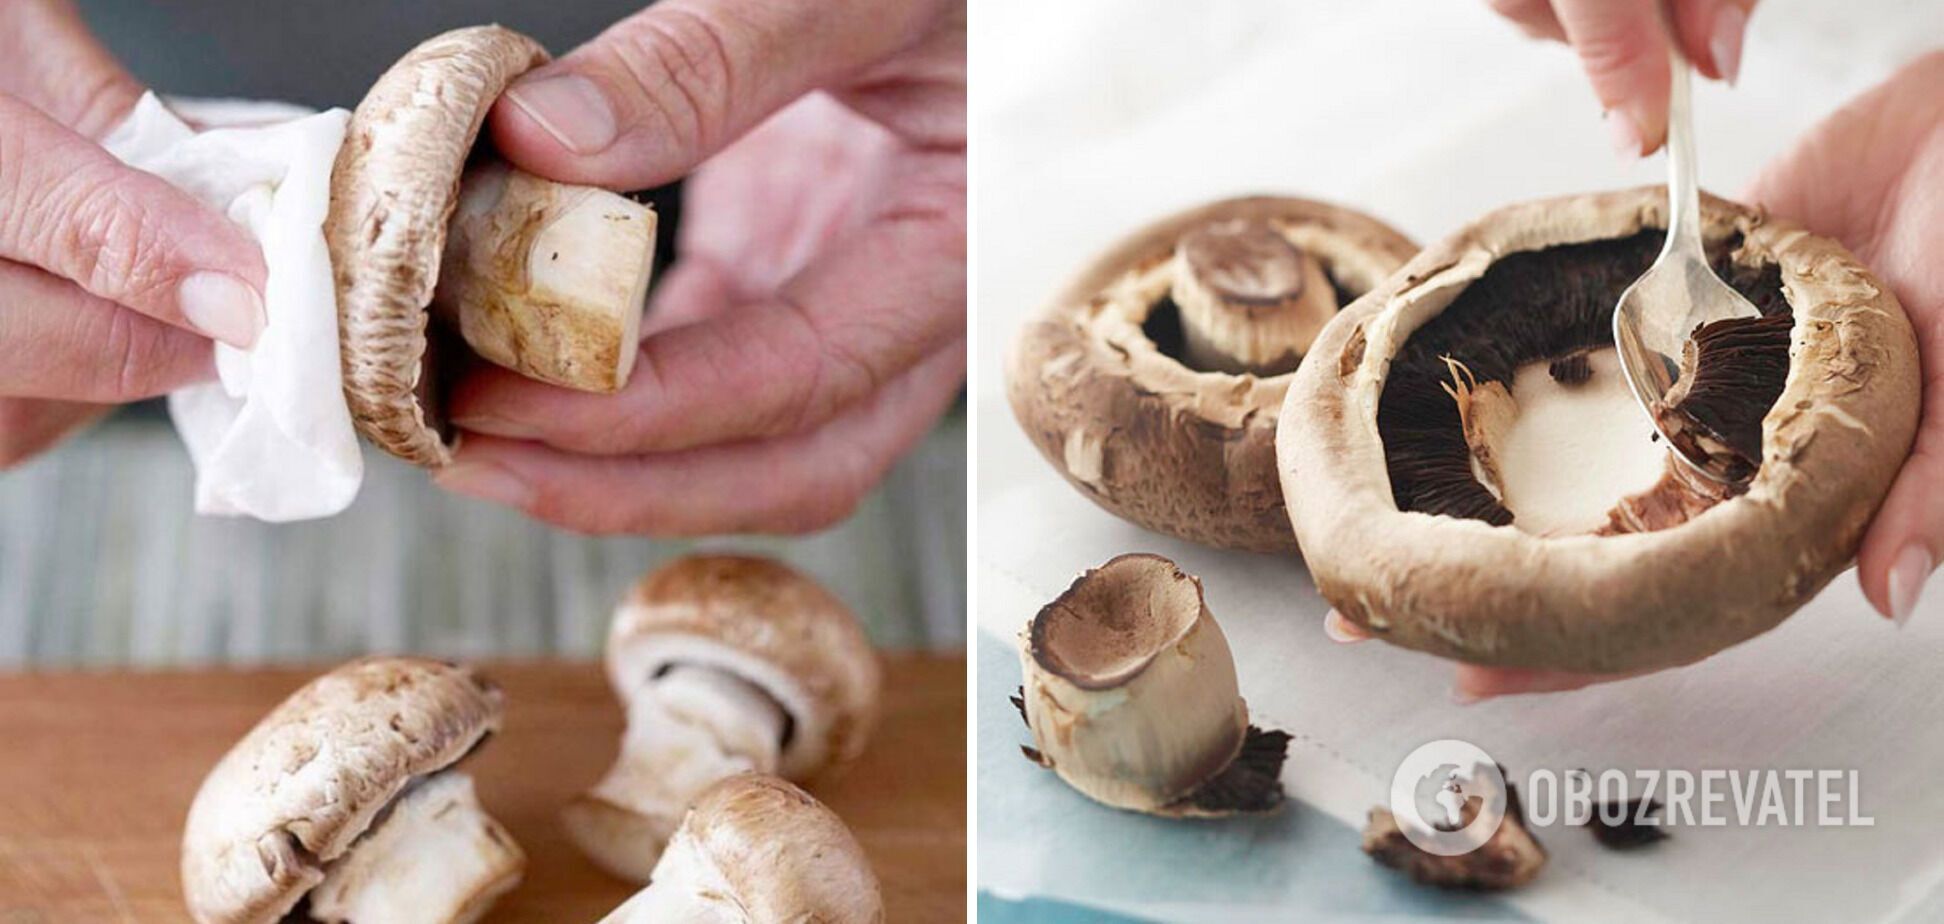 How to properly stuff mushrooms